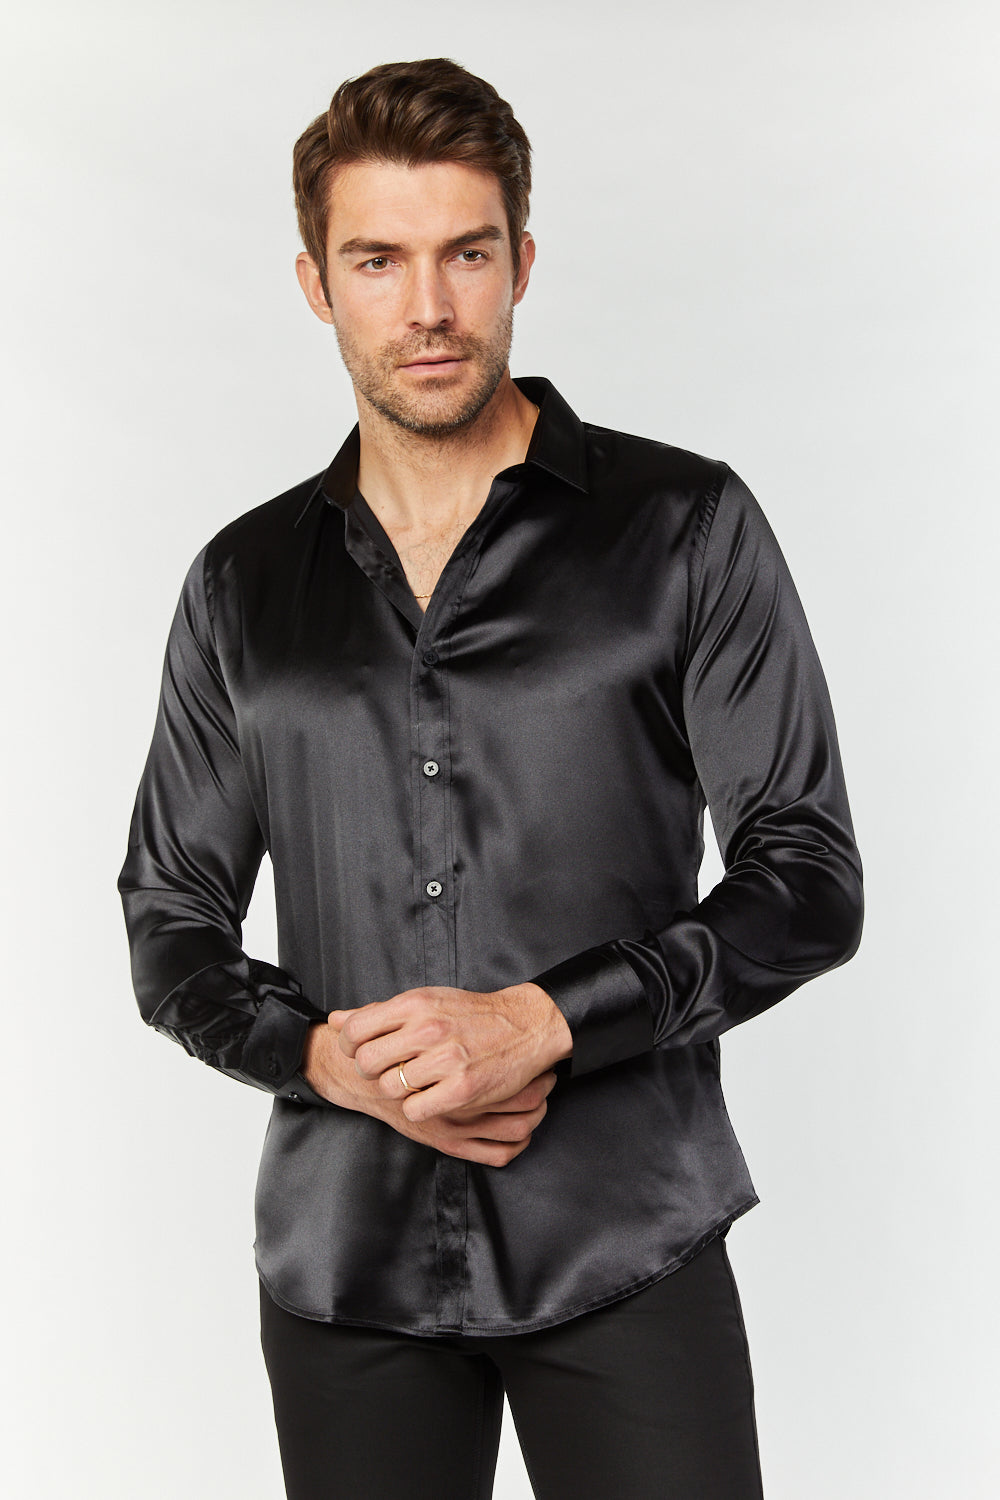 Men's Satin Black Dress Shirt